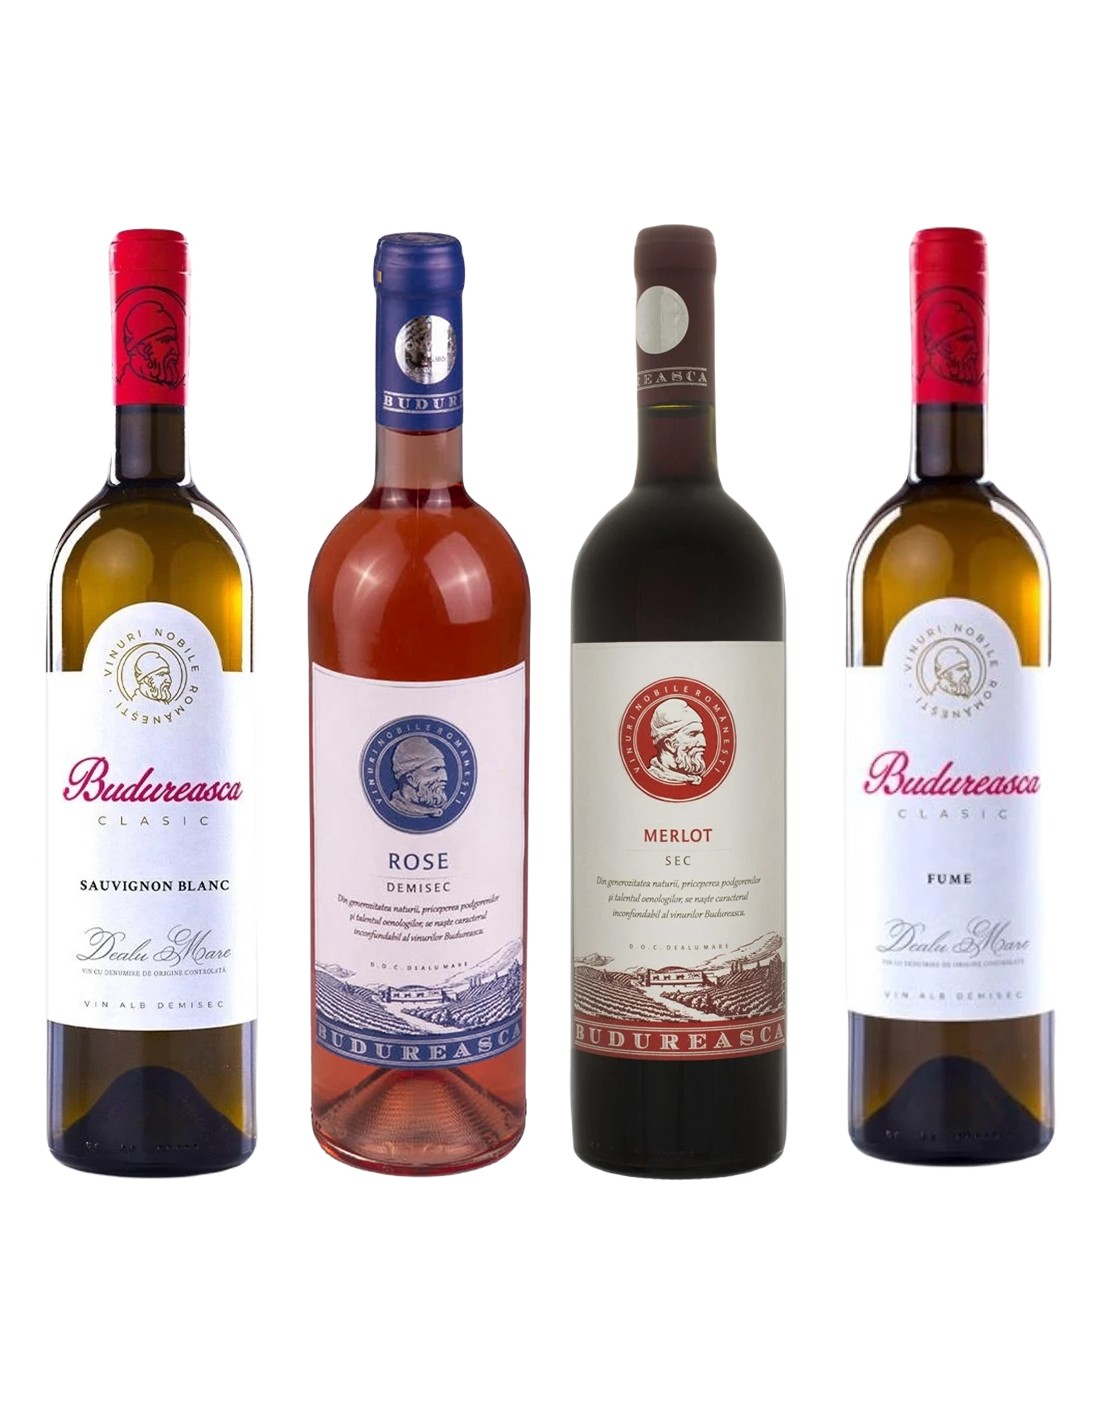 Pachet Budureasca Romanian Wine Selection alcooldiscount.ro